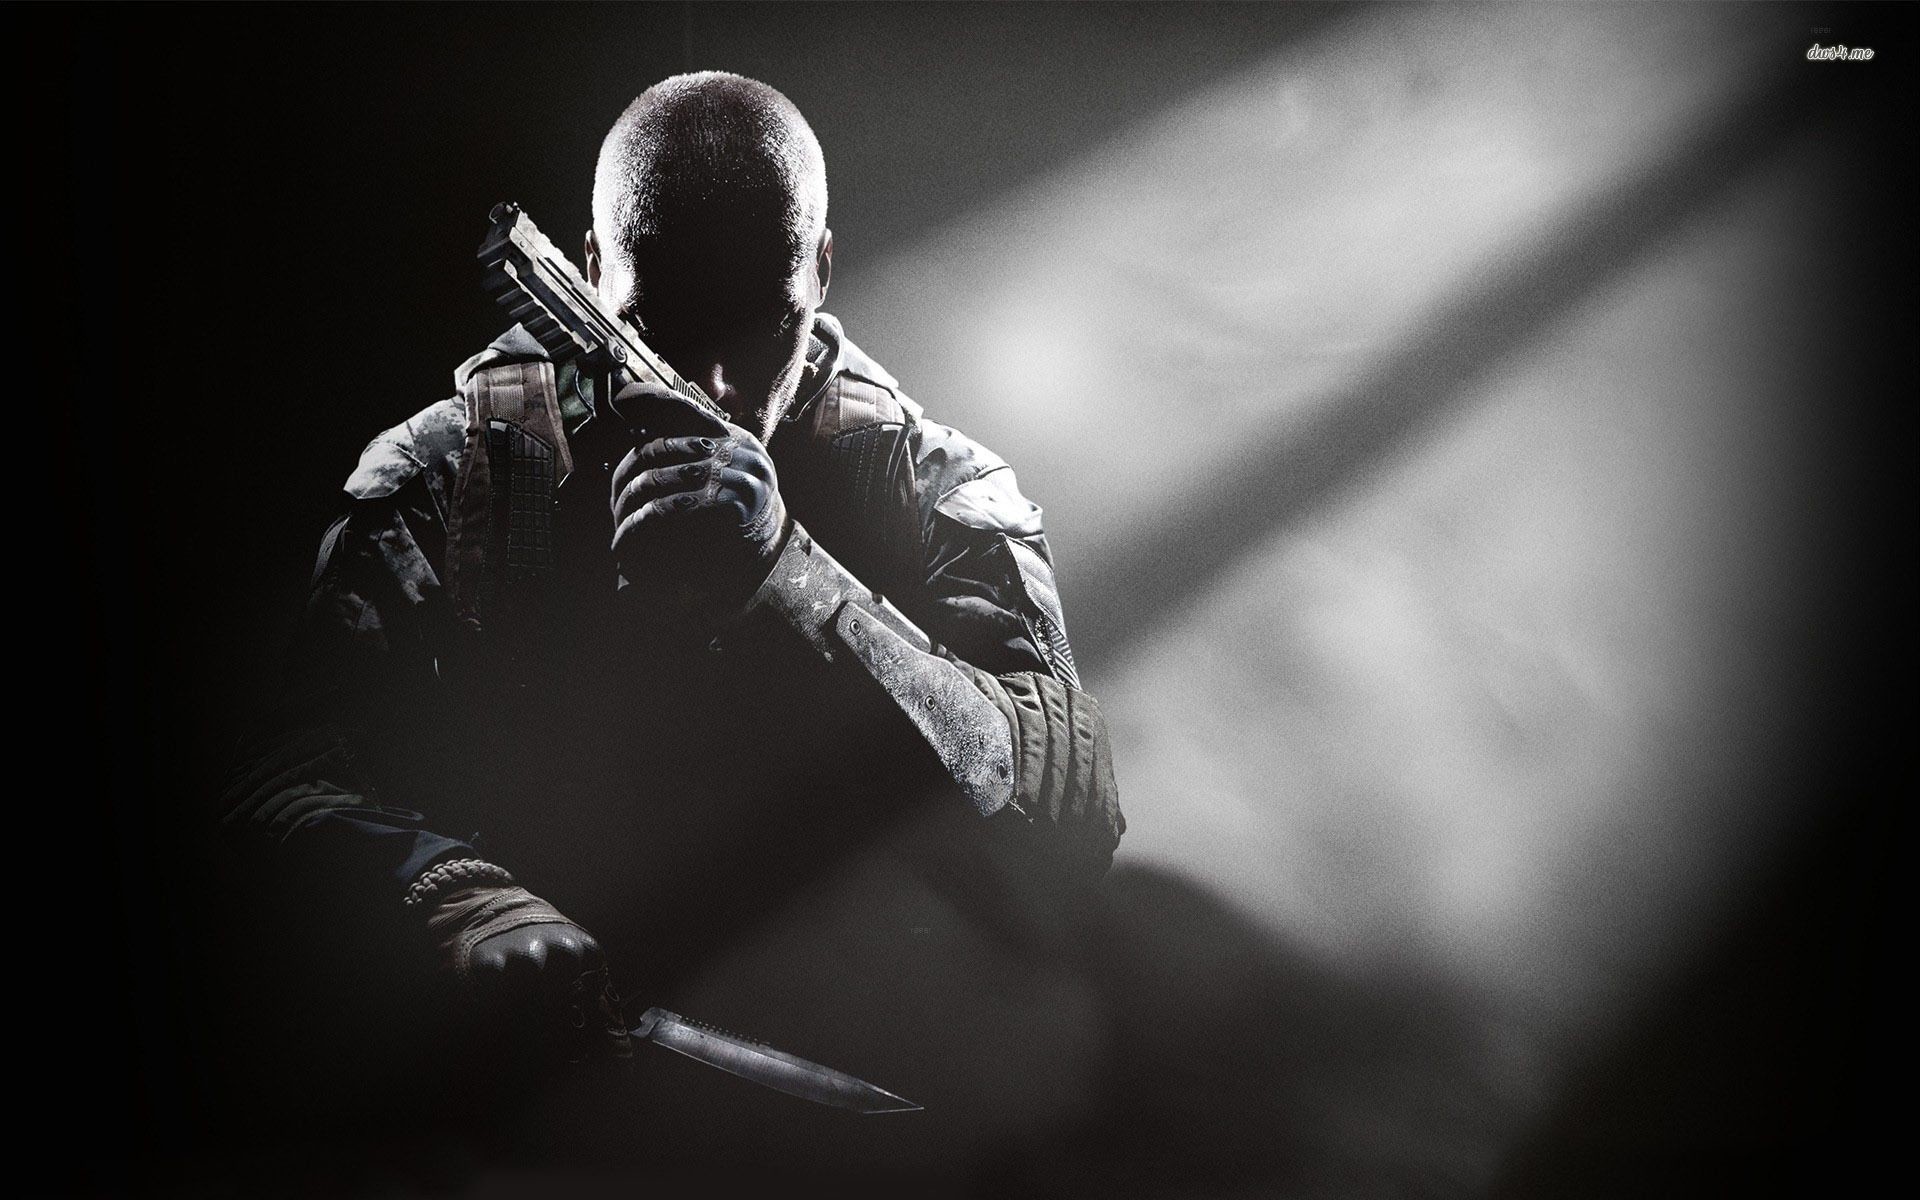 Call of Duty  Black Ops 2 Wallpaper on Behance